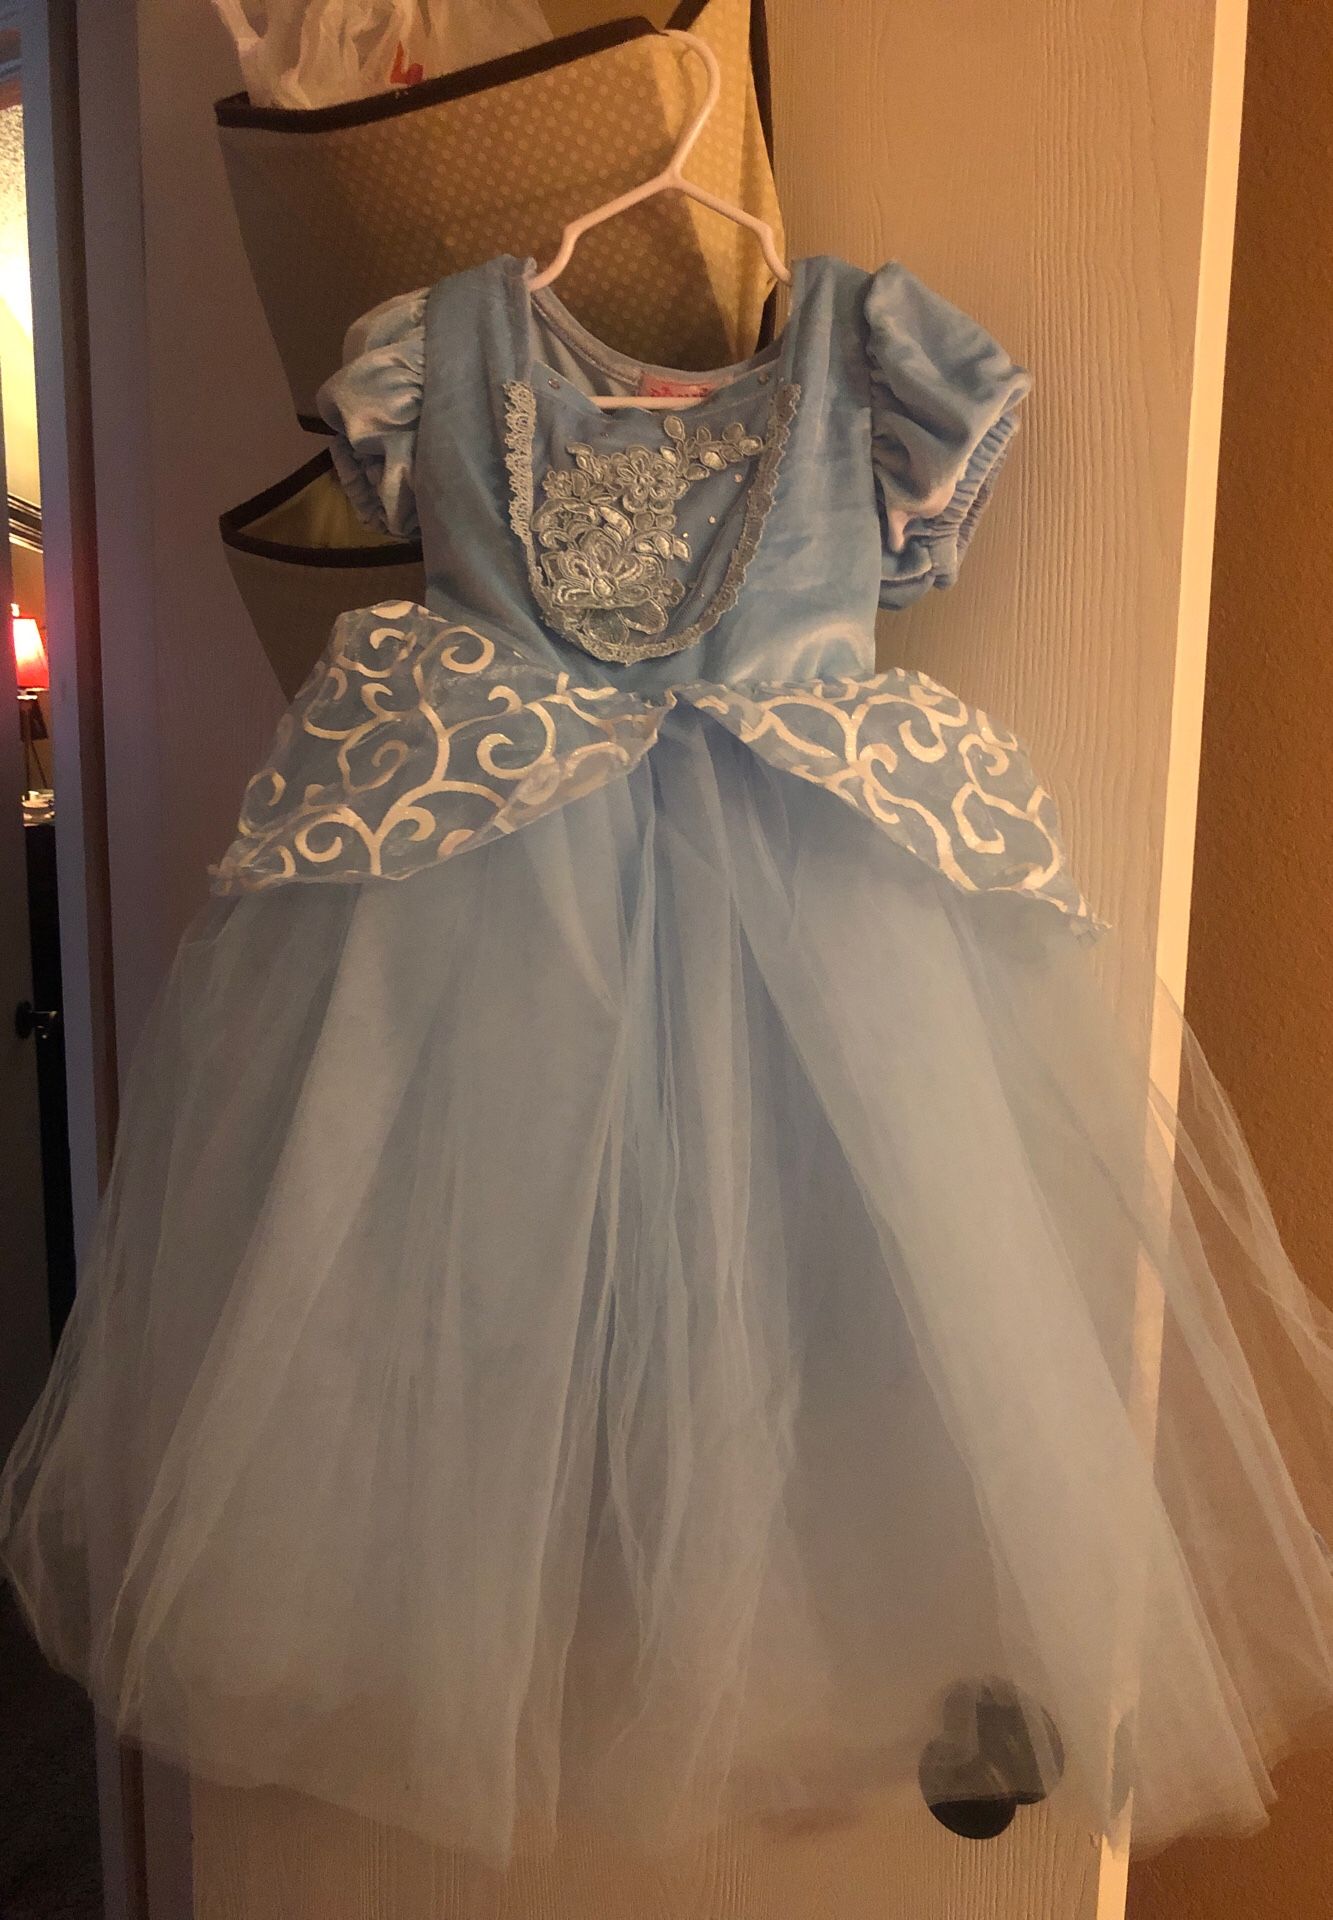 Cinderella dress size 3-4